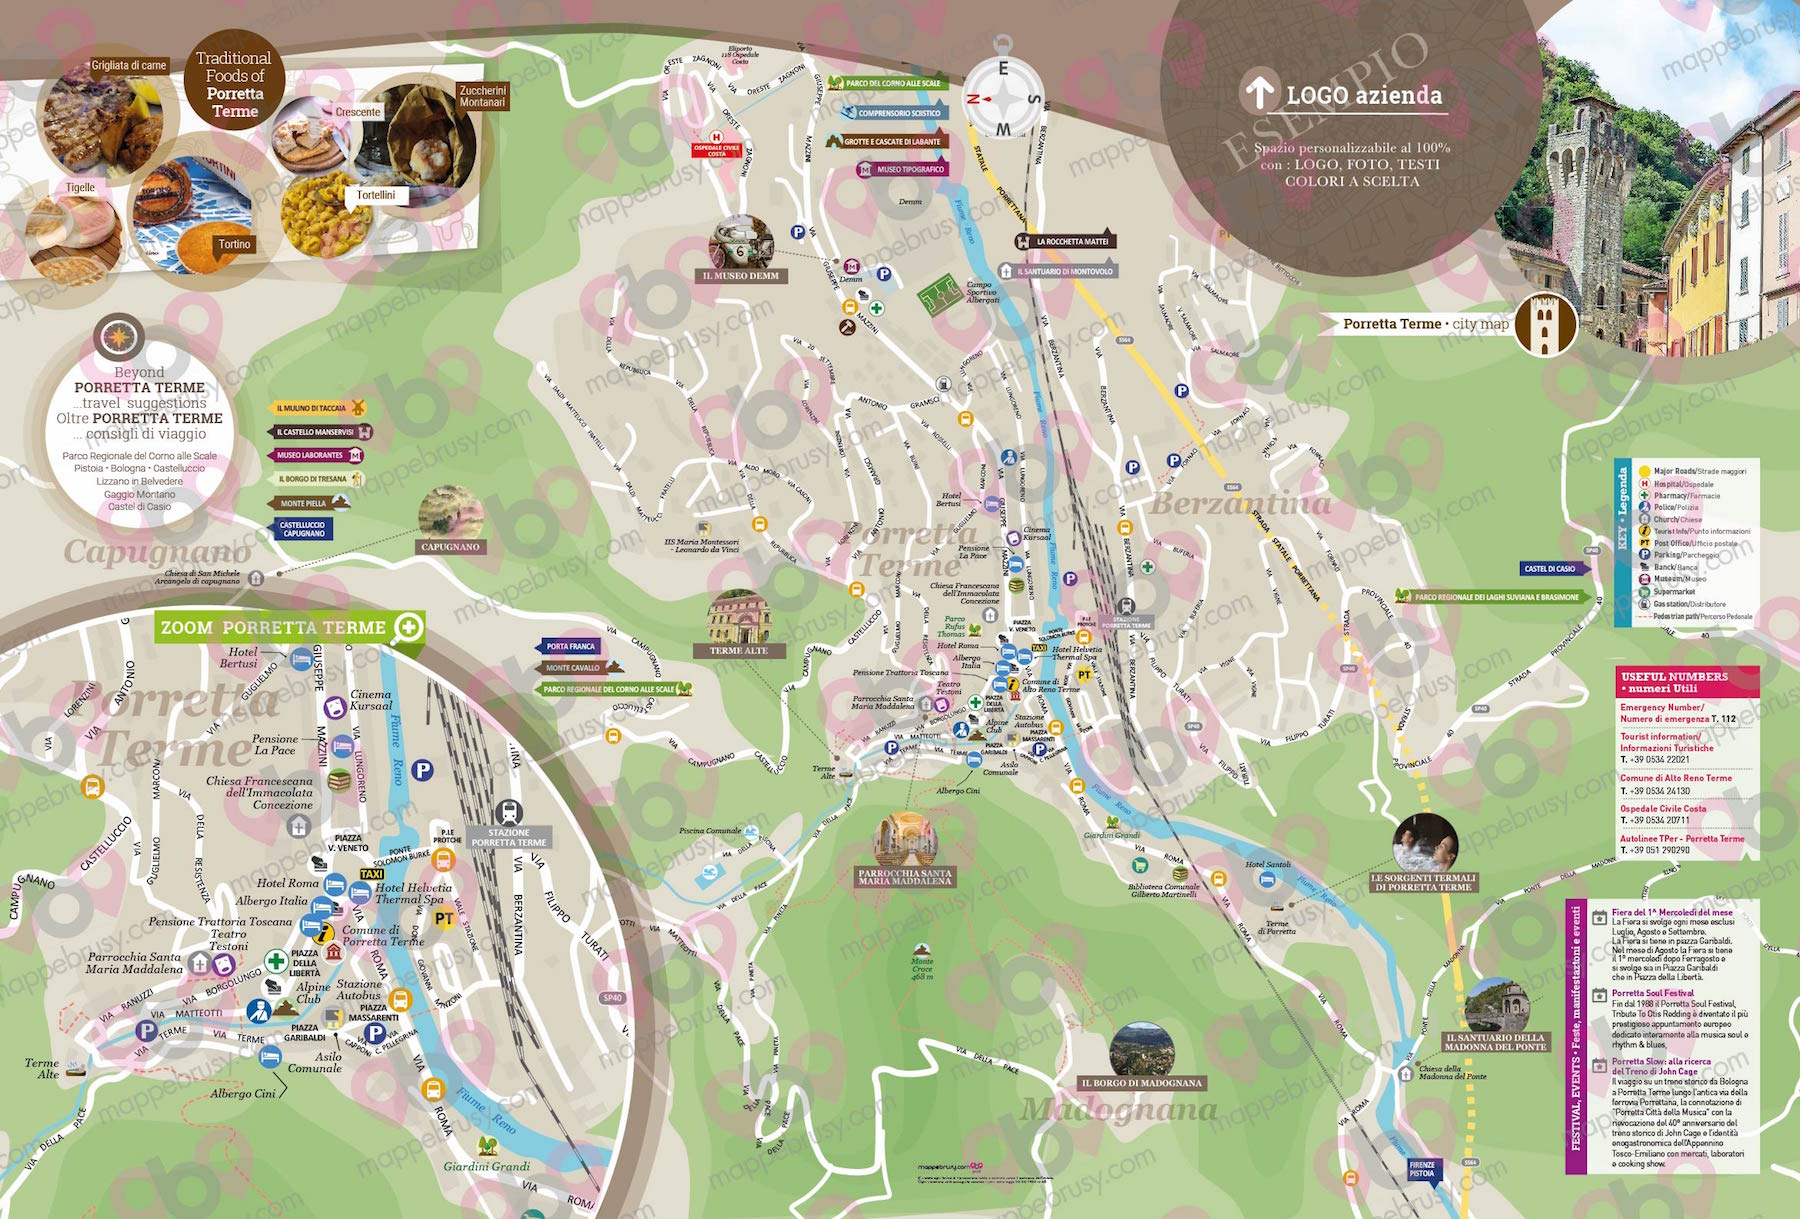 Mappa di Porretta Terme - Porretta Terme city map - mappa Porretta Terme - mappa personalizzata di Porretta Terme